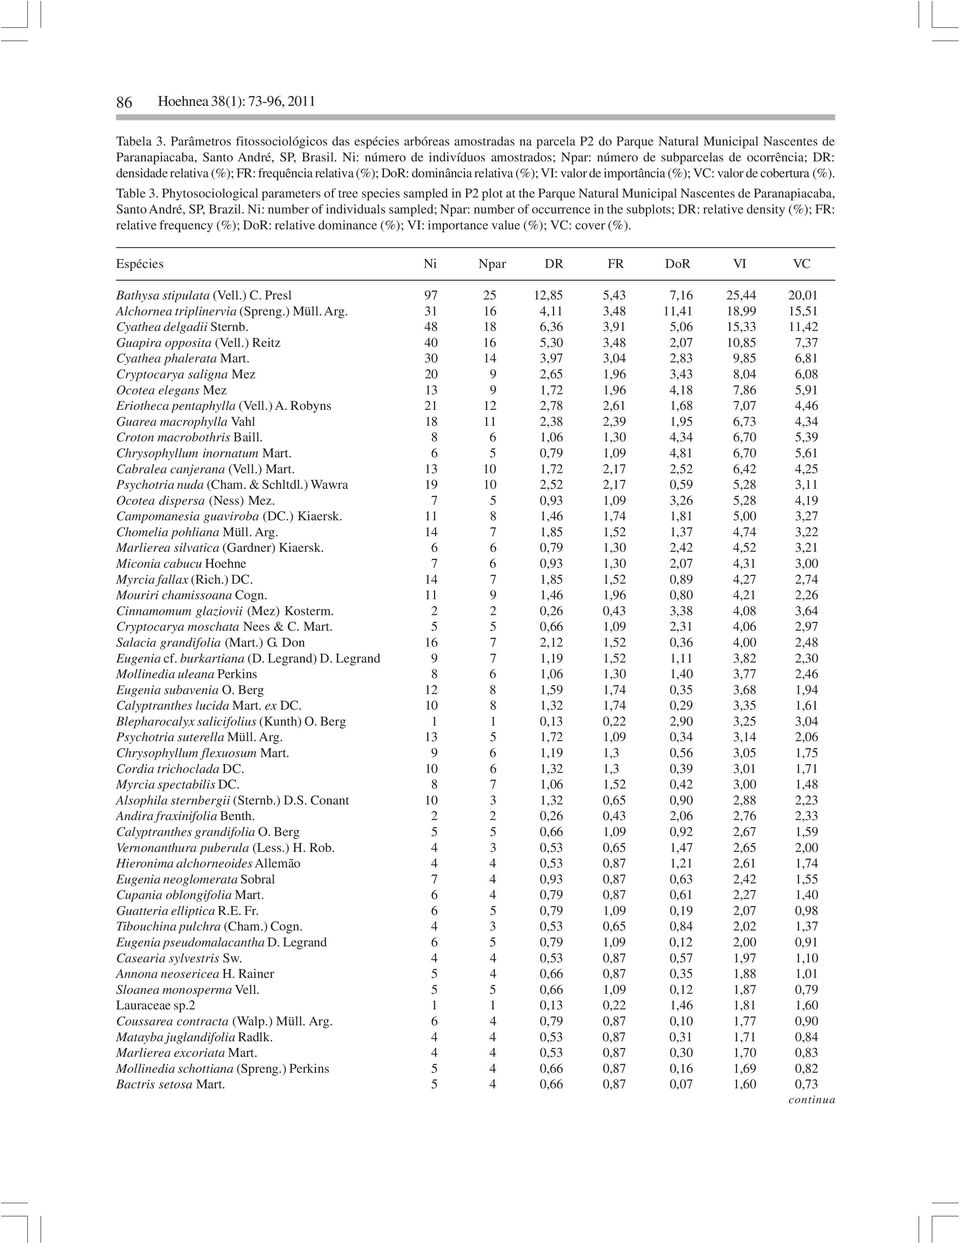 VC: valor de cobertura (%). Table 3. Phytosociological parameters of tree species sampled in P2 plot at the Parque Natural Municipal Nascentes de Paranapiacaba, Santo André, SP, Brazil.